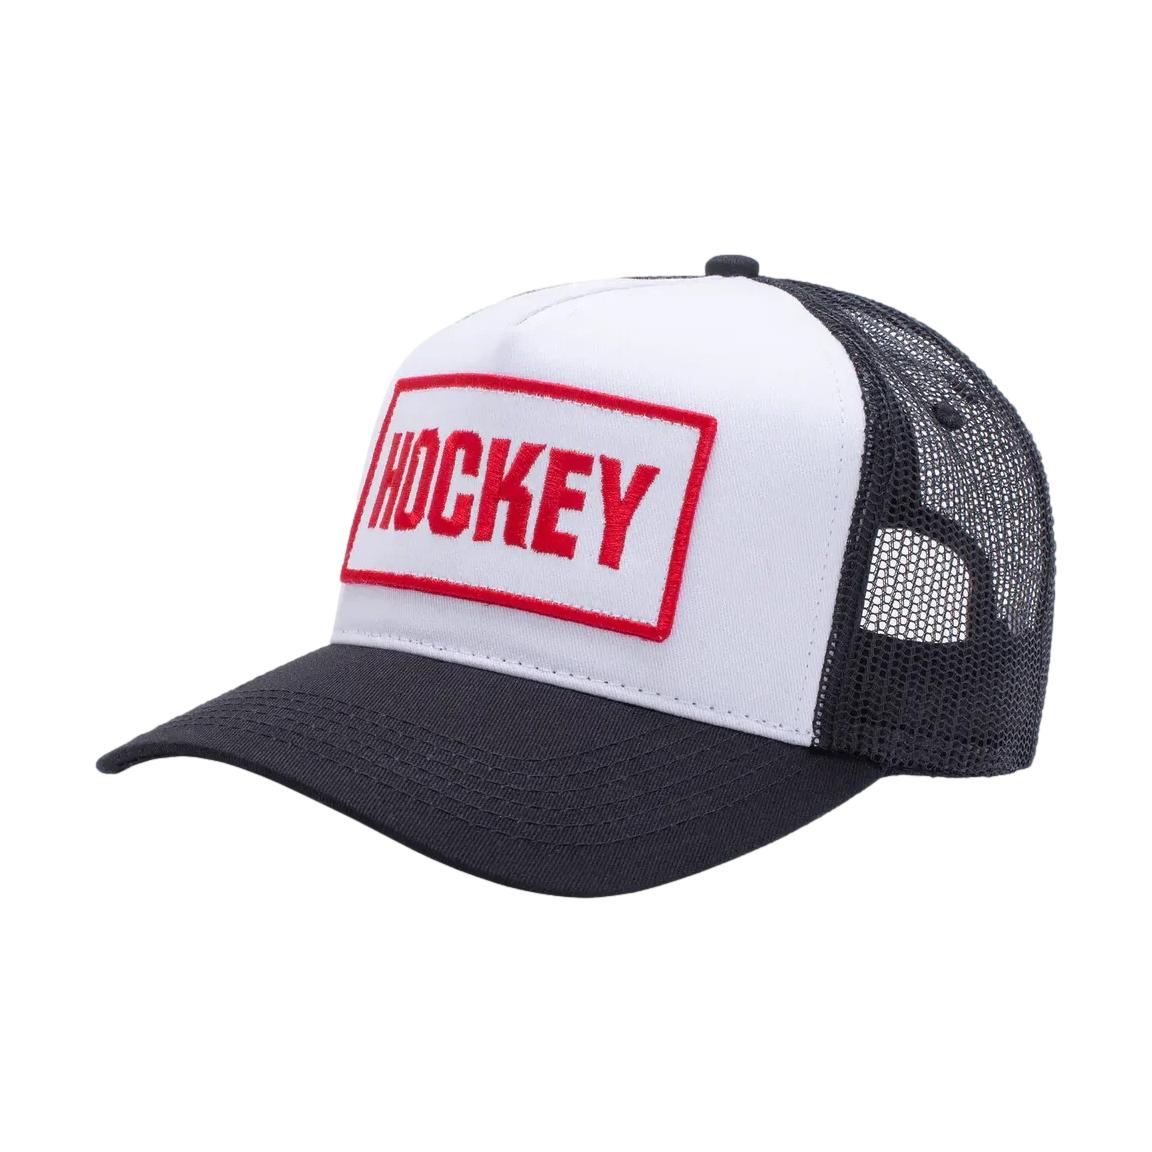 Hockey Truckstop Hat Black - Venue Skateboards